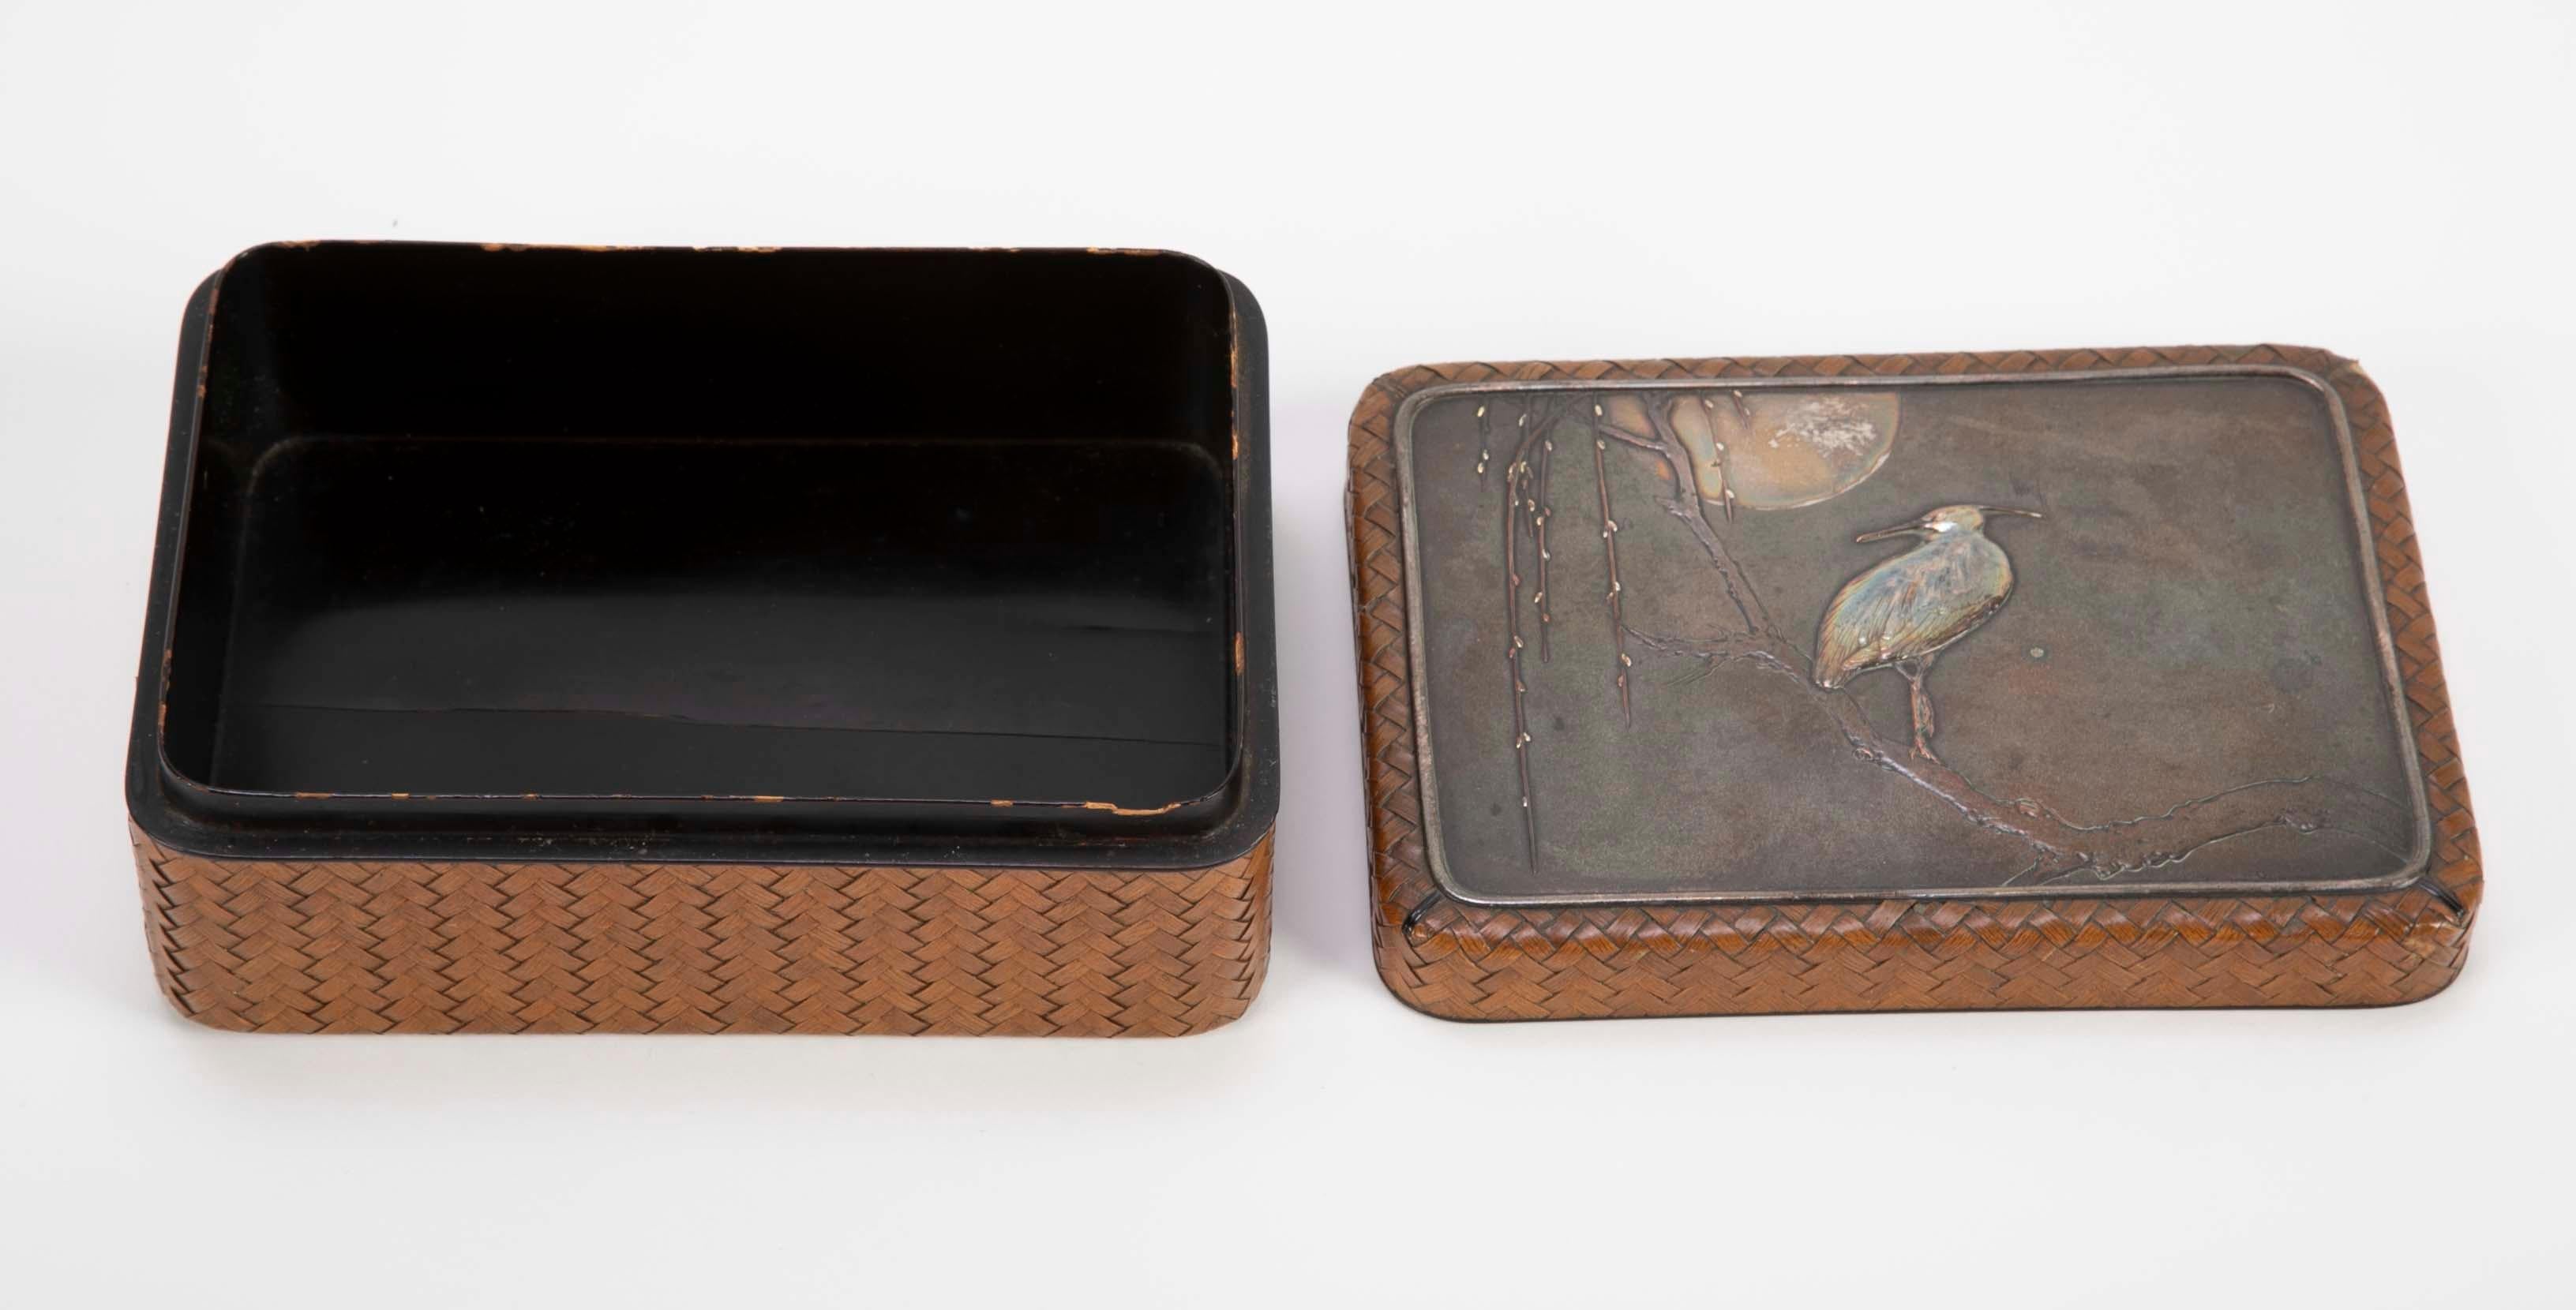 19th Century Japanese Meiji Period Box of Woven Cane, Lacquer, Silver & Copper